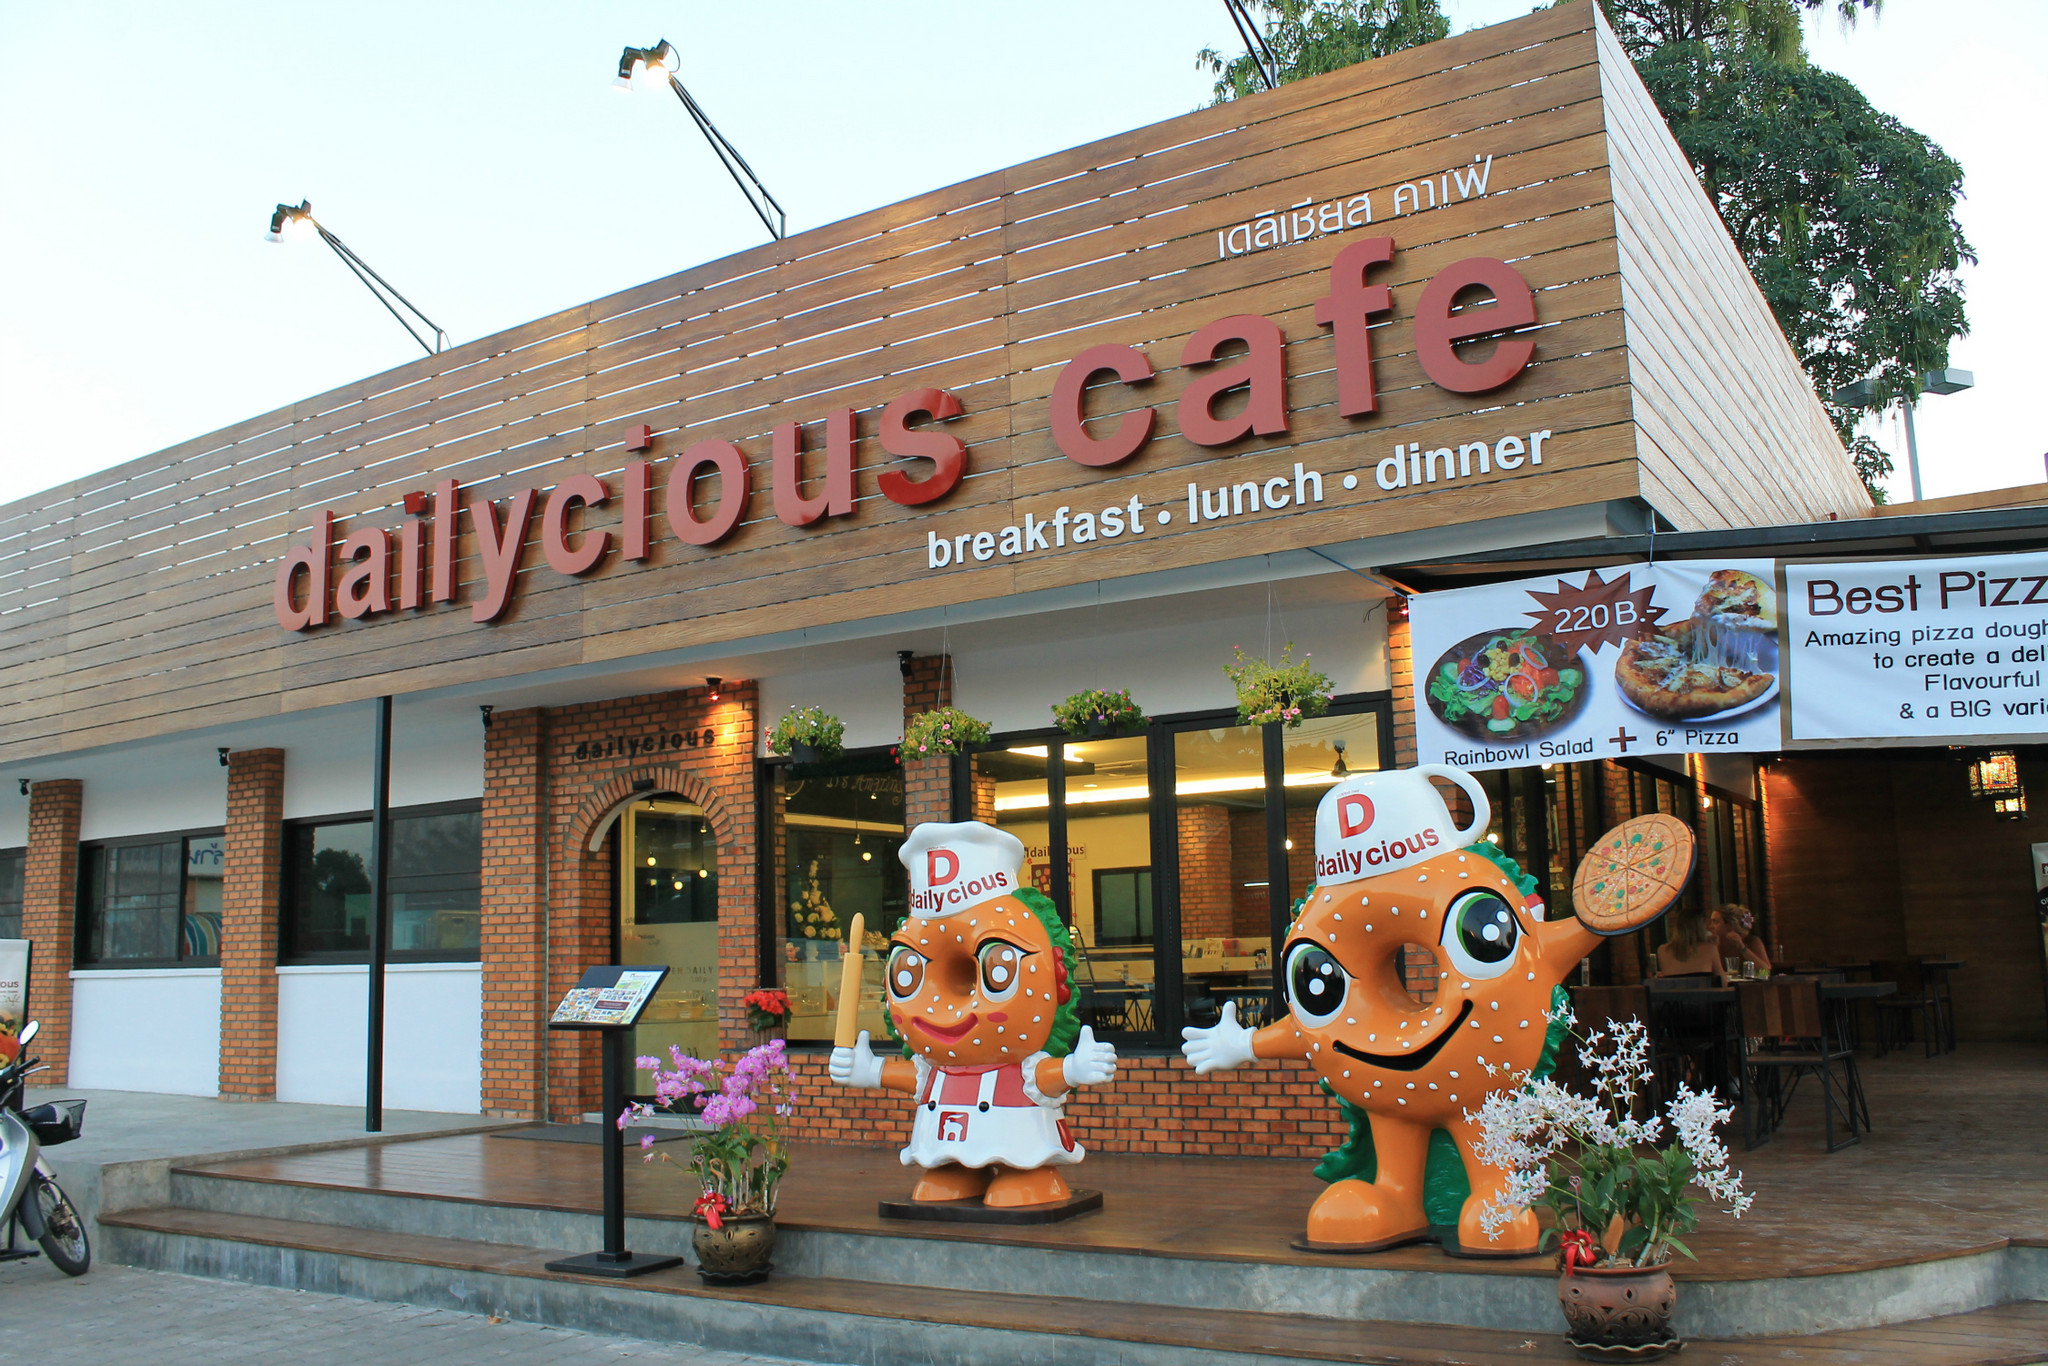 Dailycious Cafe